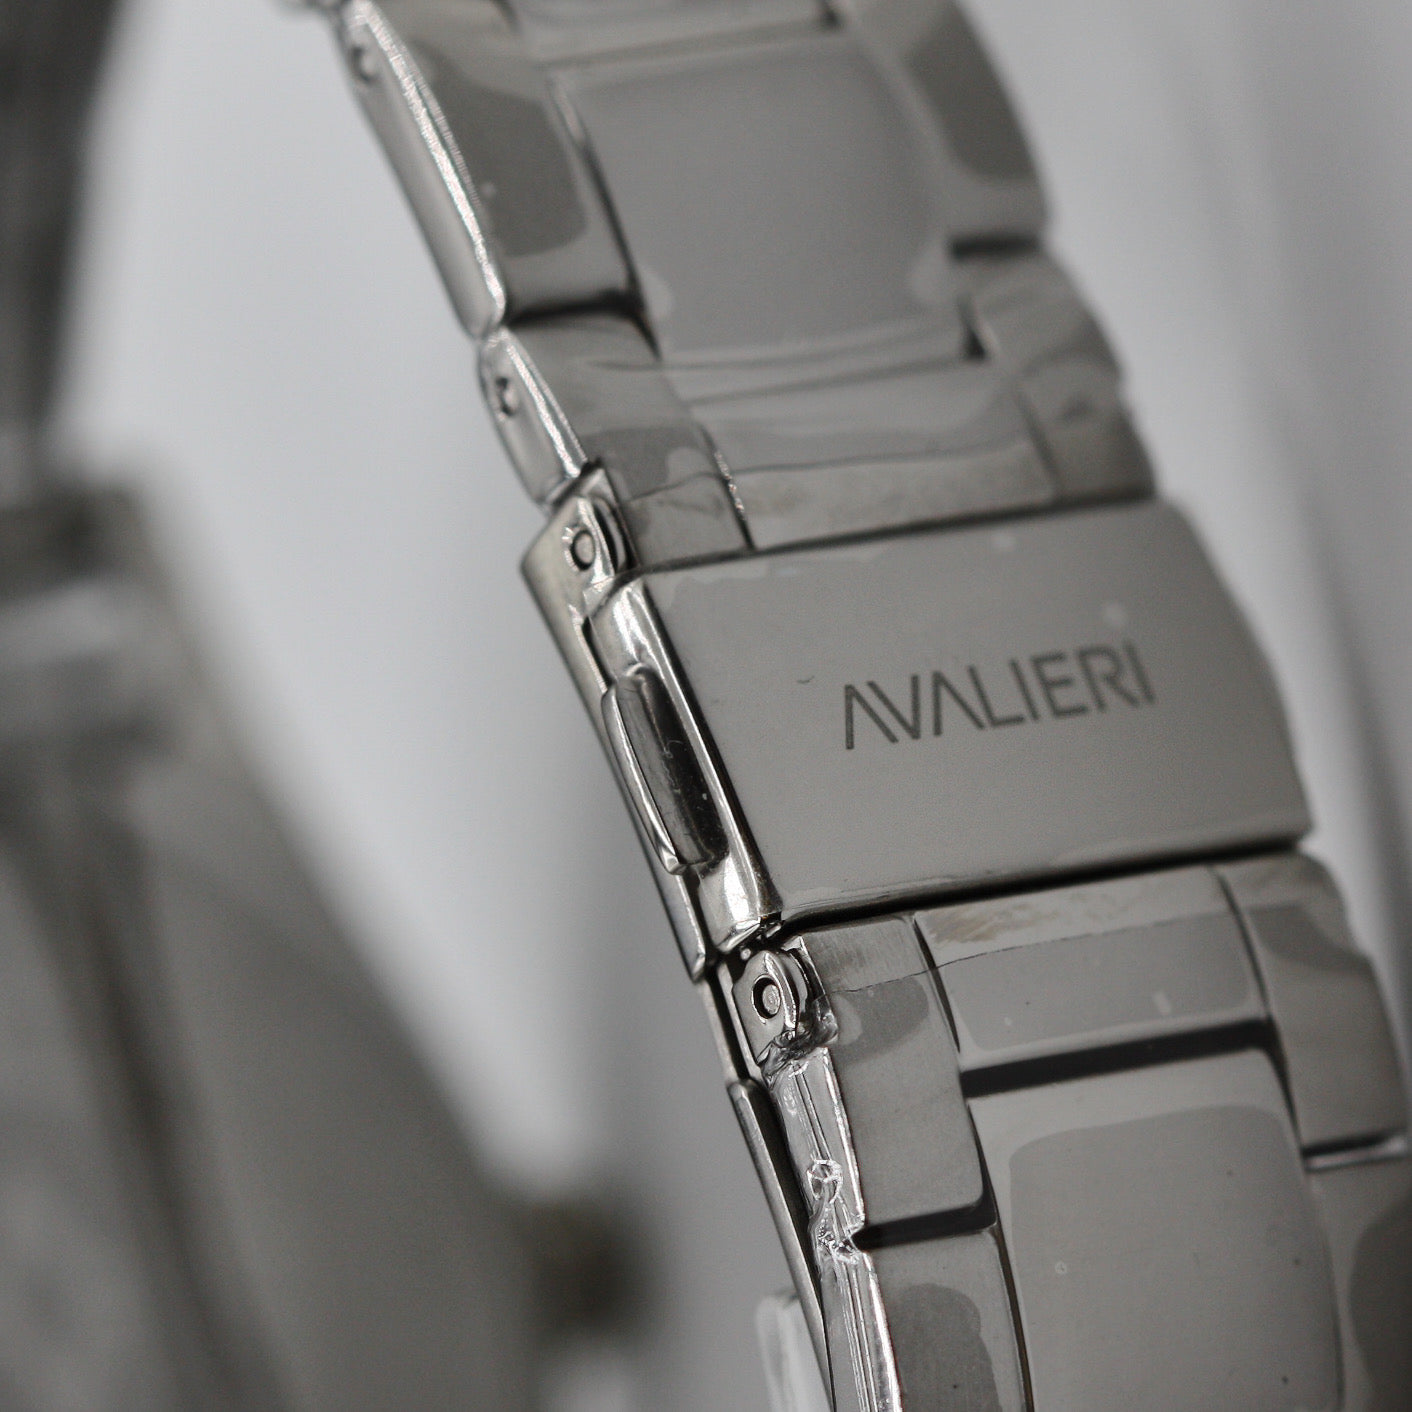 Avalieri Women's Quartz Watch, Red Dial - AV-2588B